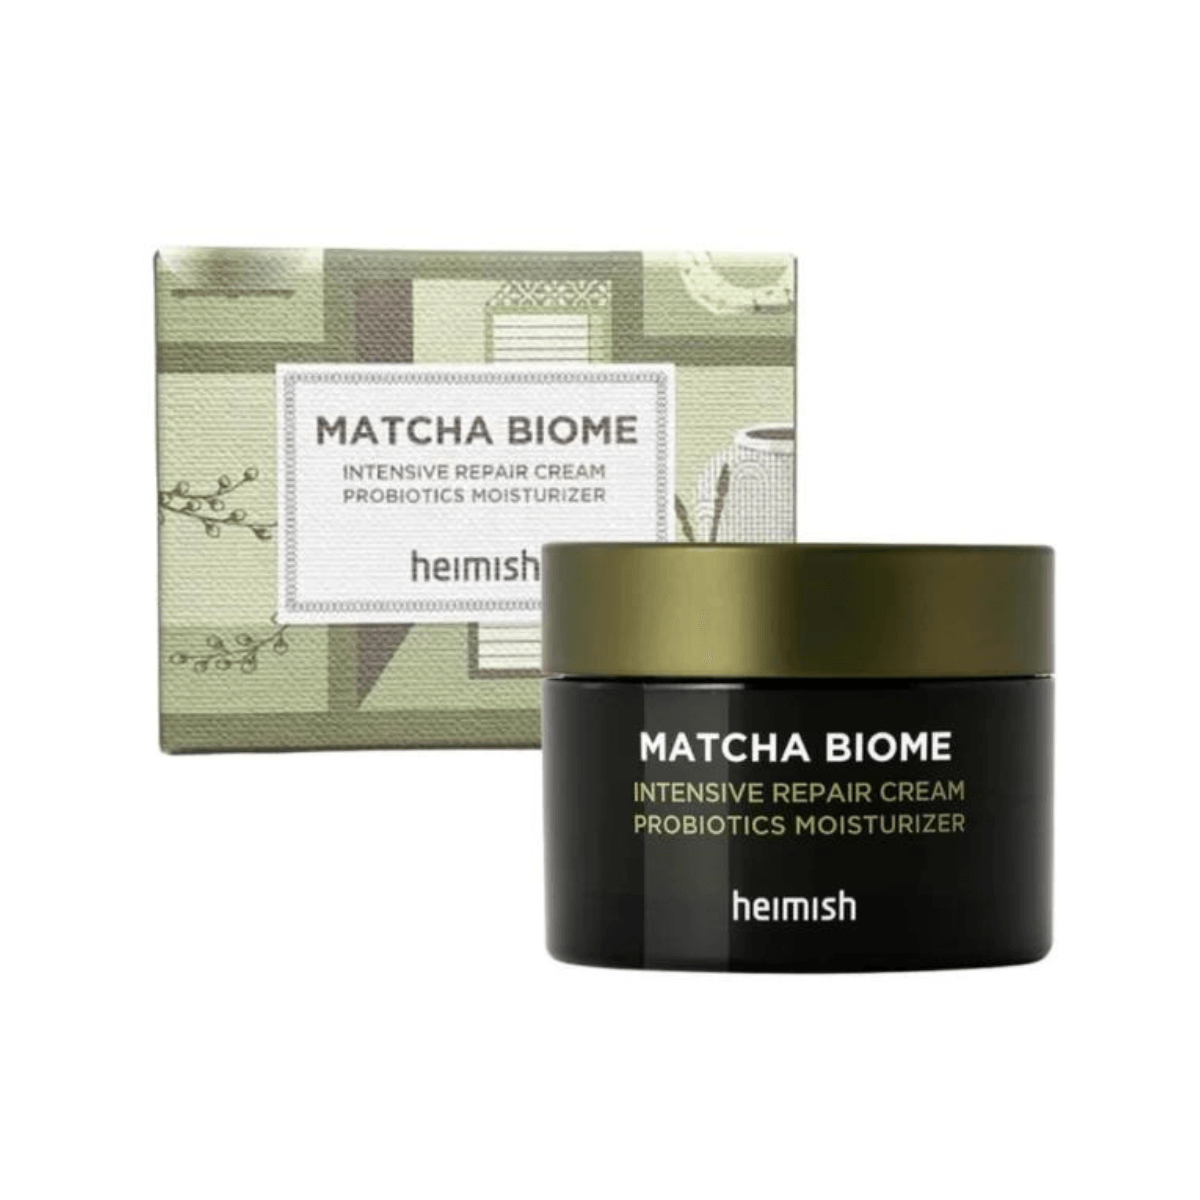 Matcha Biome Intensive Repair Cream - 50ml - K-Beauty Arabia